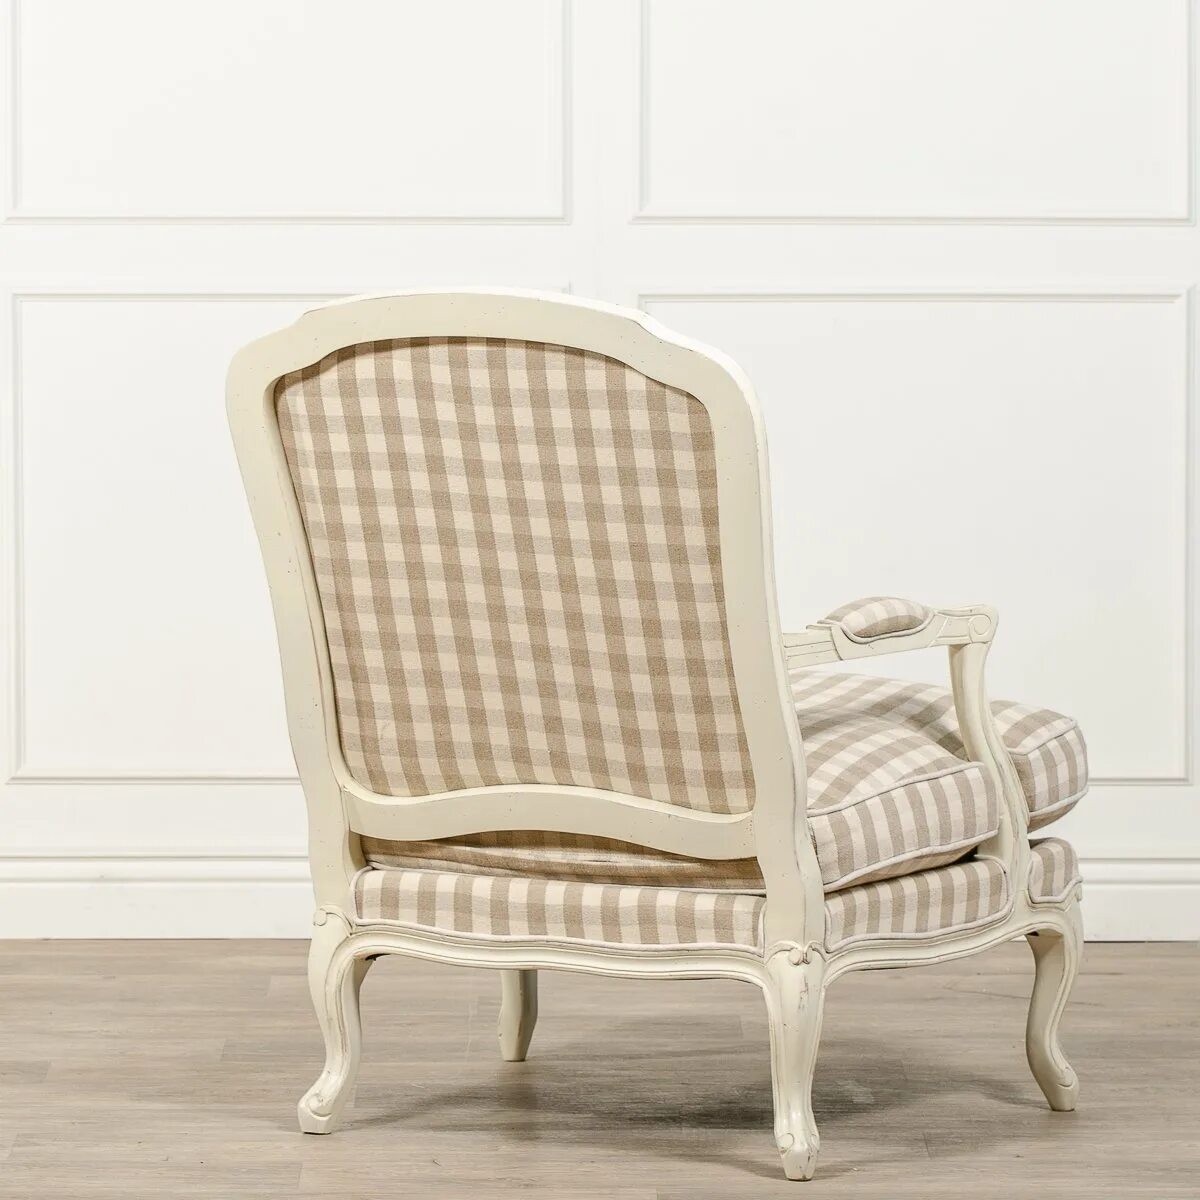 Кресло df813 (s2-1). Кресло Rammus Прованс. Кресло Прованс YH-c1658w белое. Кресло классика Прованс.